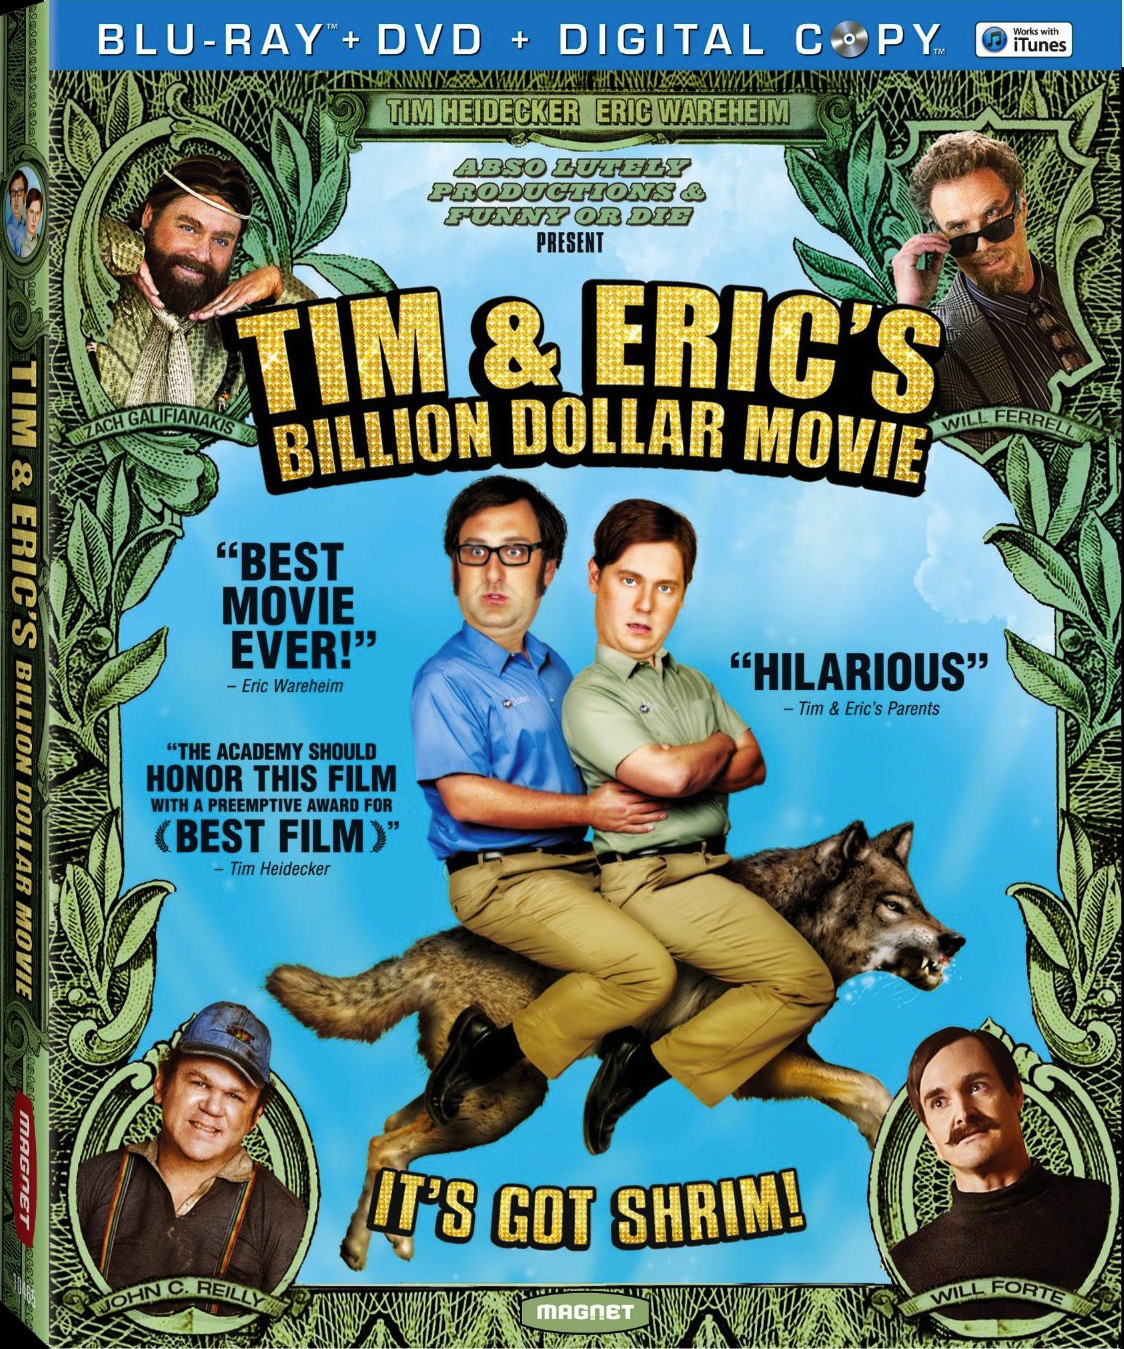 DVD REVIEW: TIM & ERIC’S BILLION DOLLAR MOVIE | CHUD.com